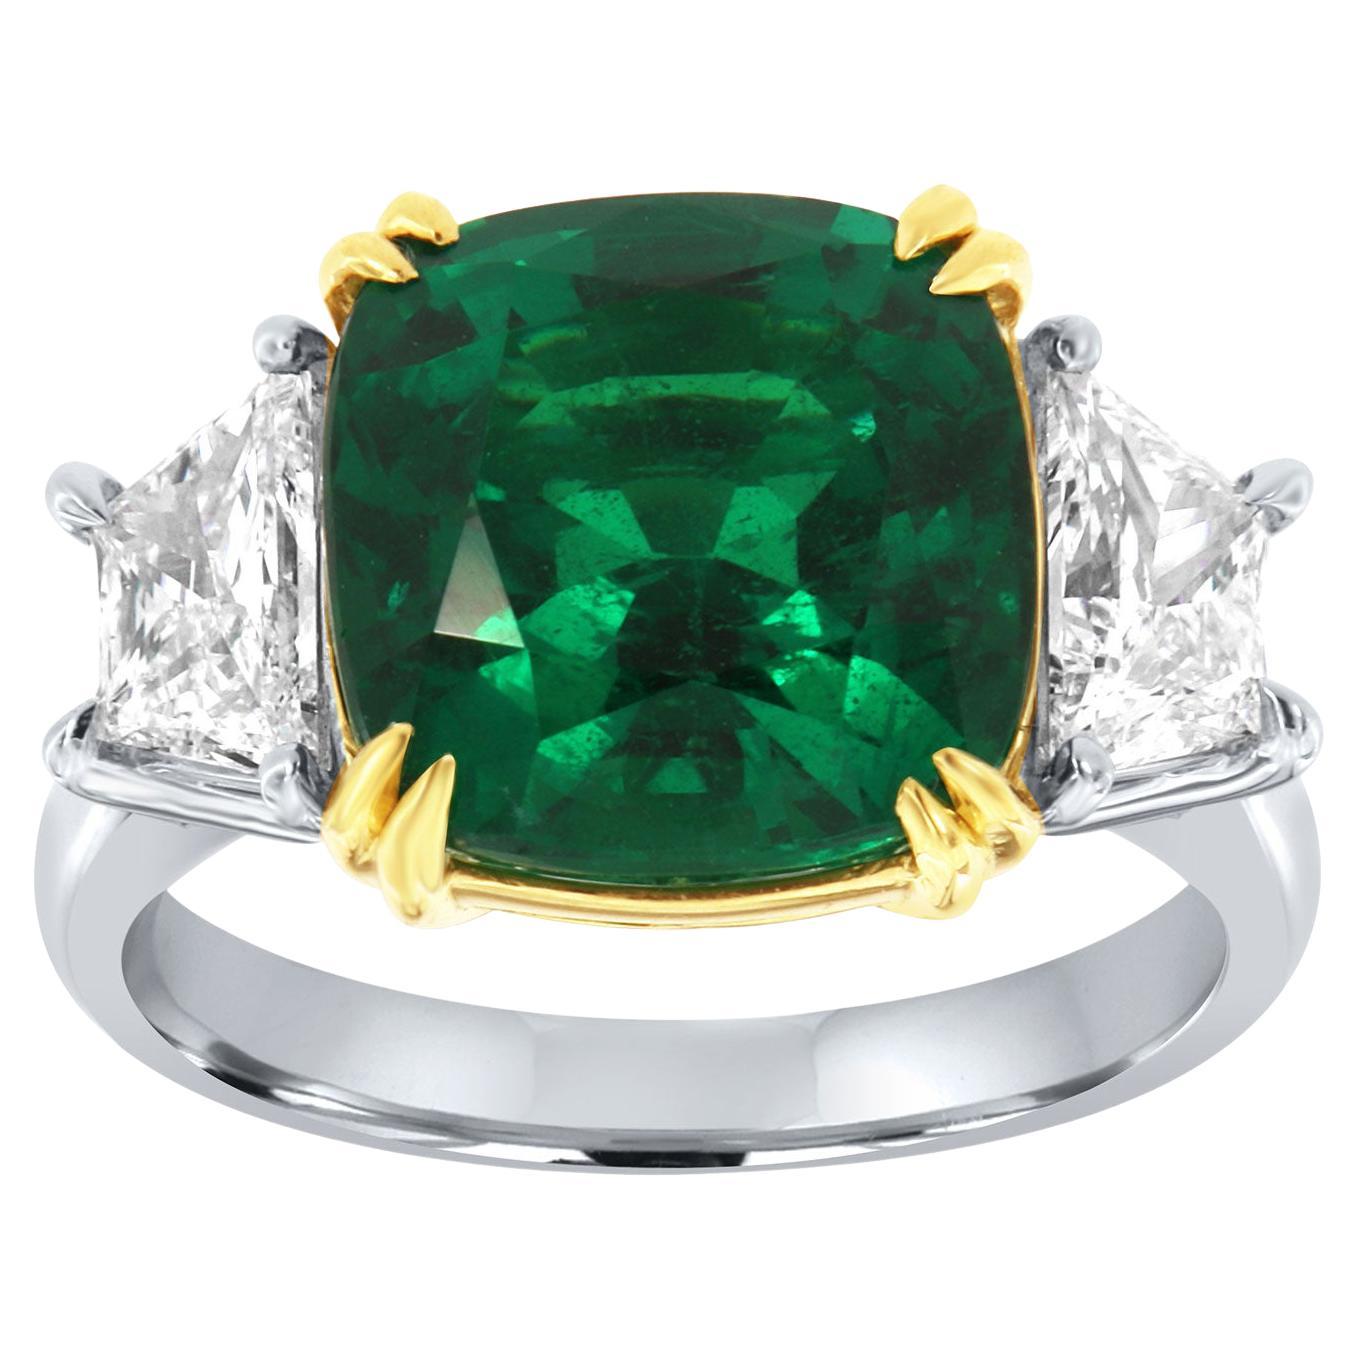 GIA Certified 5.99 Carat Rare Cushion Vibrant Green Emerald Diamond PLT Ring